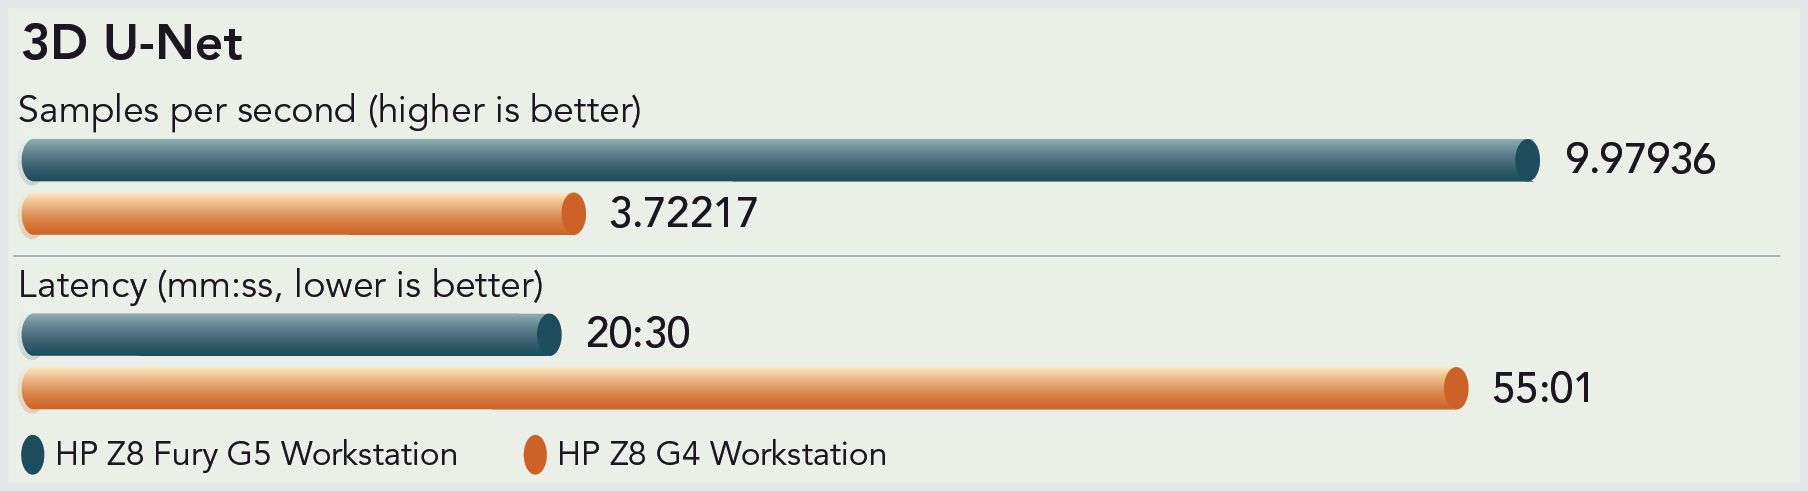 Chart of 3D U-Net model in the offline scenario results. For 3D U-Net samples per second (higher is better): HP Z8 Fury G5 Workstation is 9.97936 samples per second and HP Z8 G4 Workstation is 3.72217 samples per second. For 3D U-Net latency (lower is better): HP Z8 Fury G5 Workstation latency is 20 minutes 30 seconds and HP Z8 G4 Workstation is 55 minutes and 1 second.